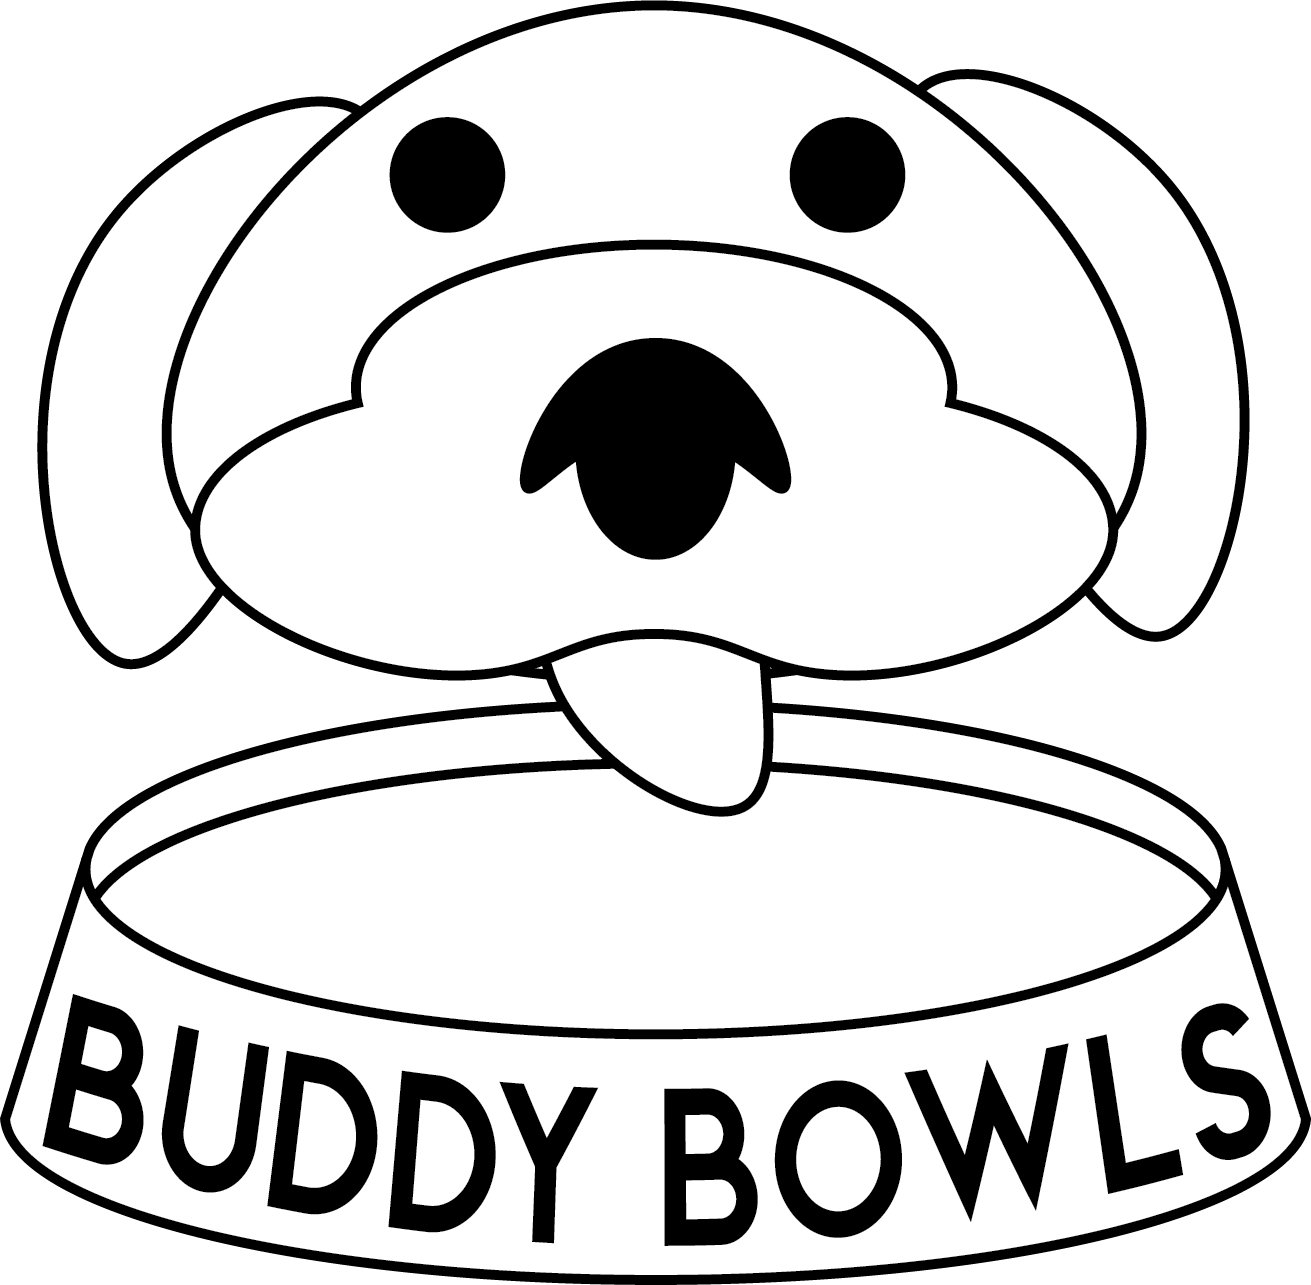 picture of buddybowls logo